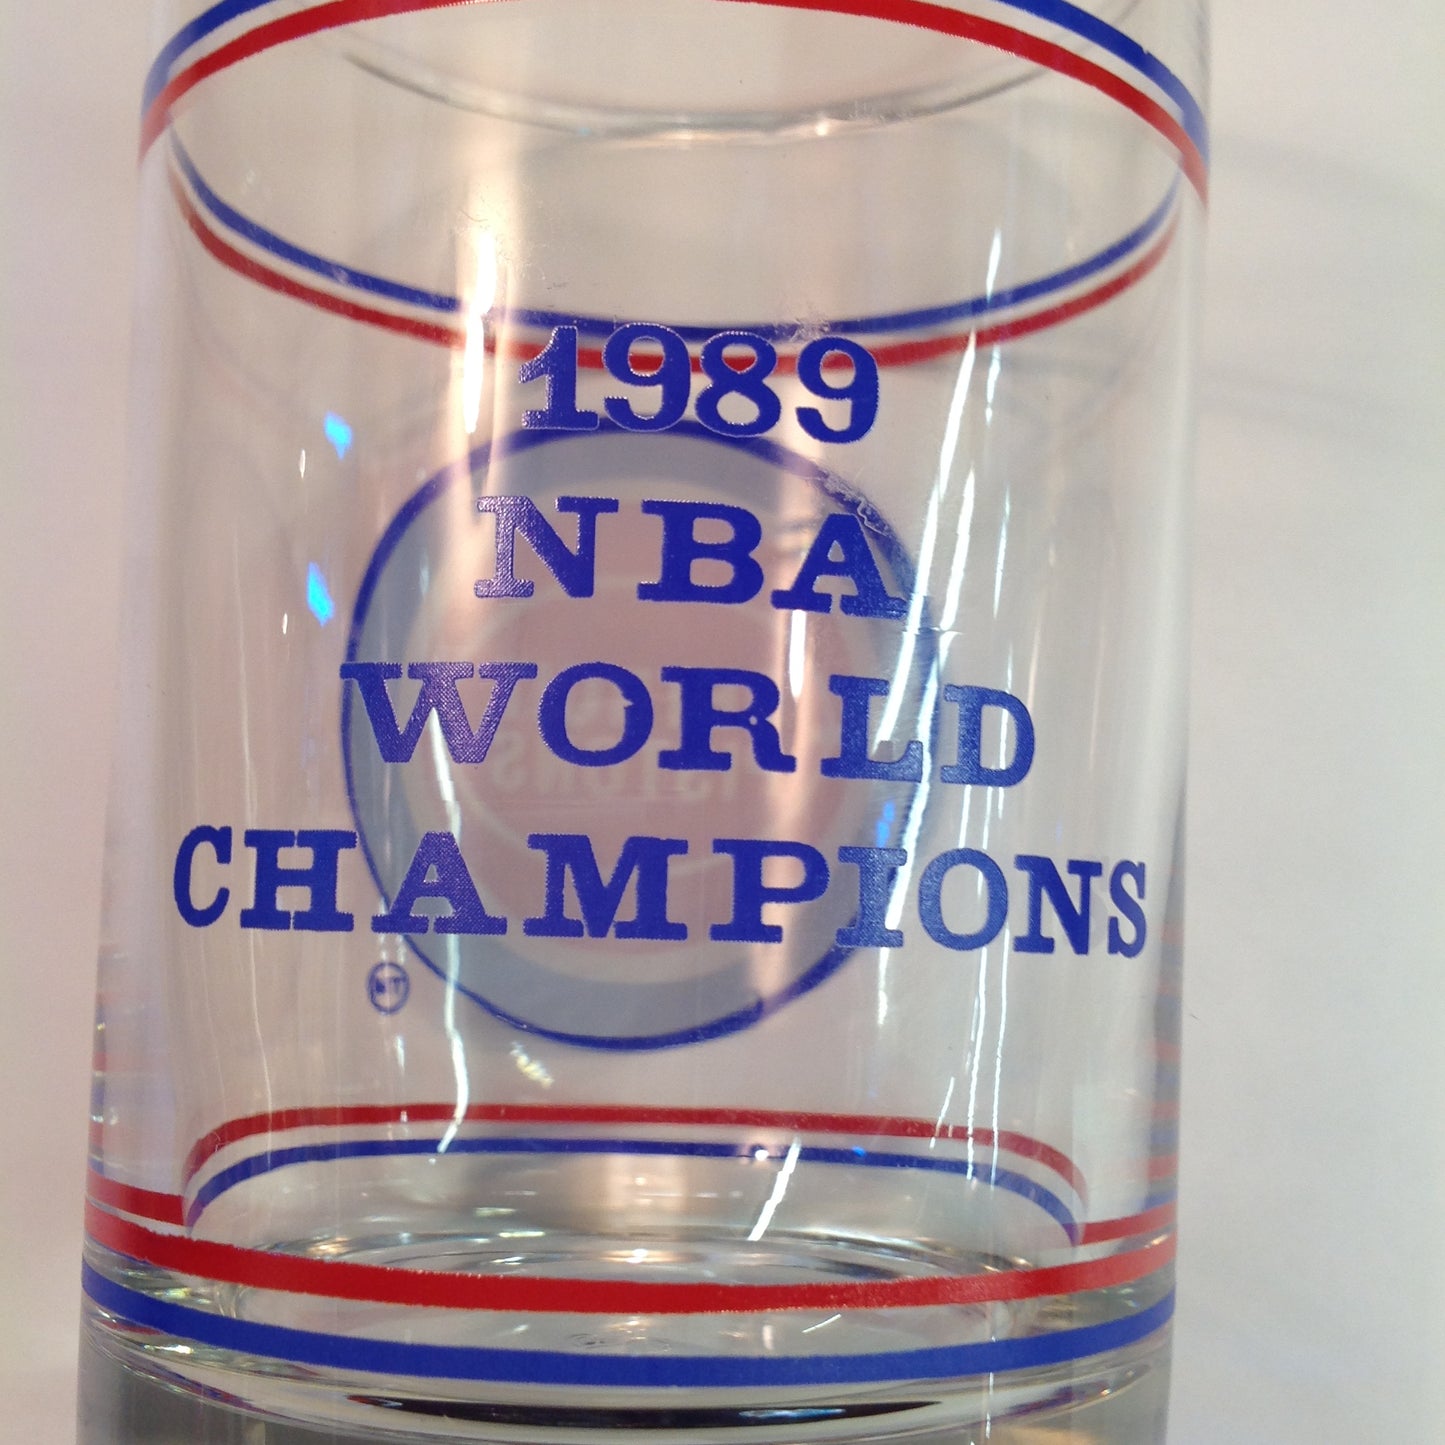 Vintage Detroit Pistons 1989 NBA World Champions Rocks Glass